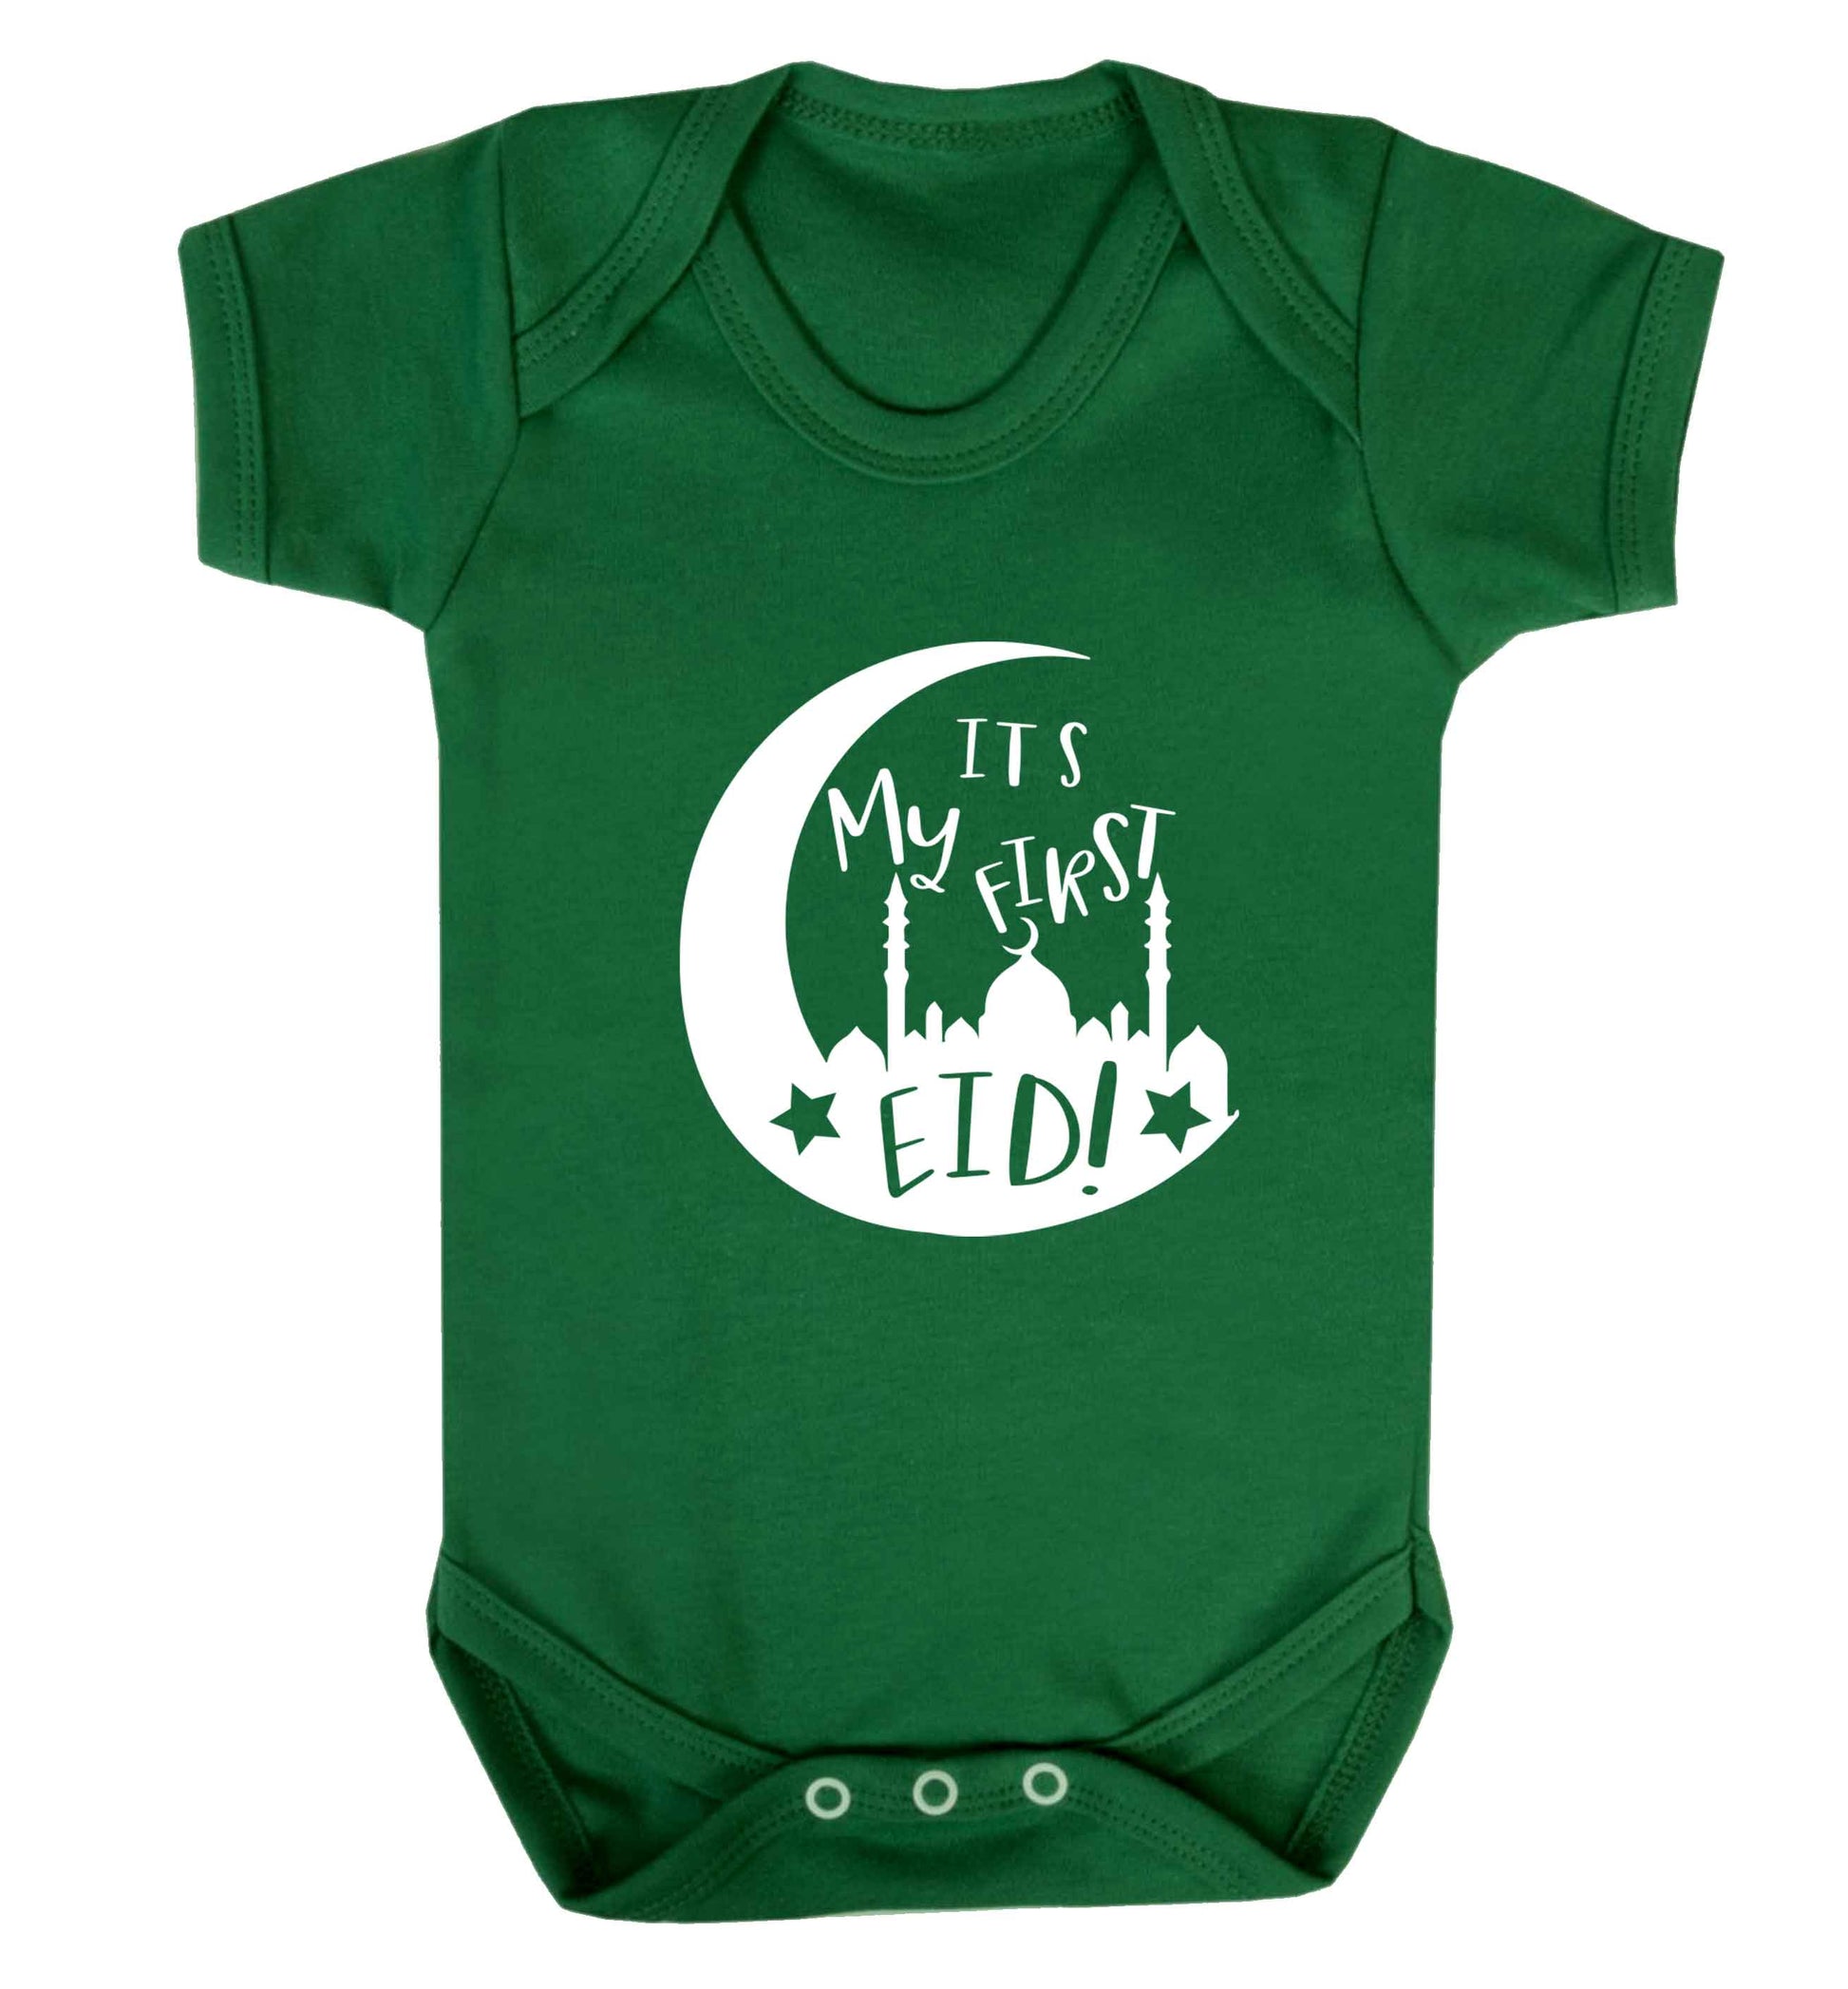 It's my first Eid moon baby vest green 18-24 months